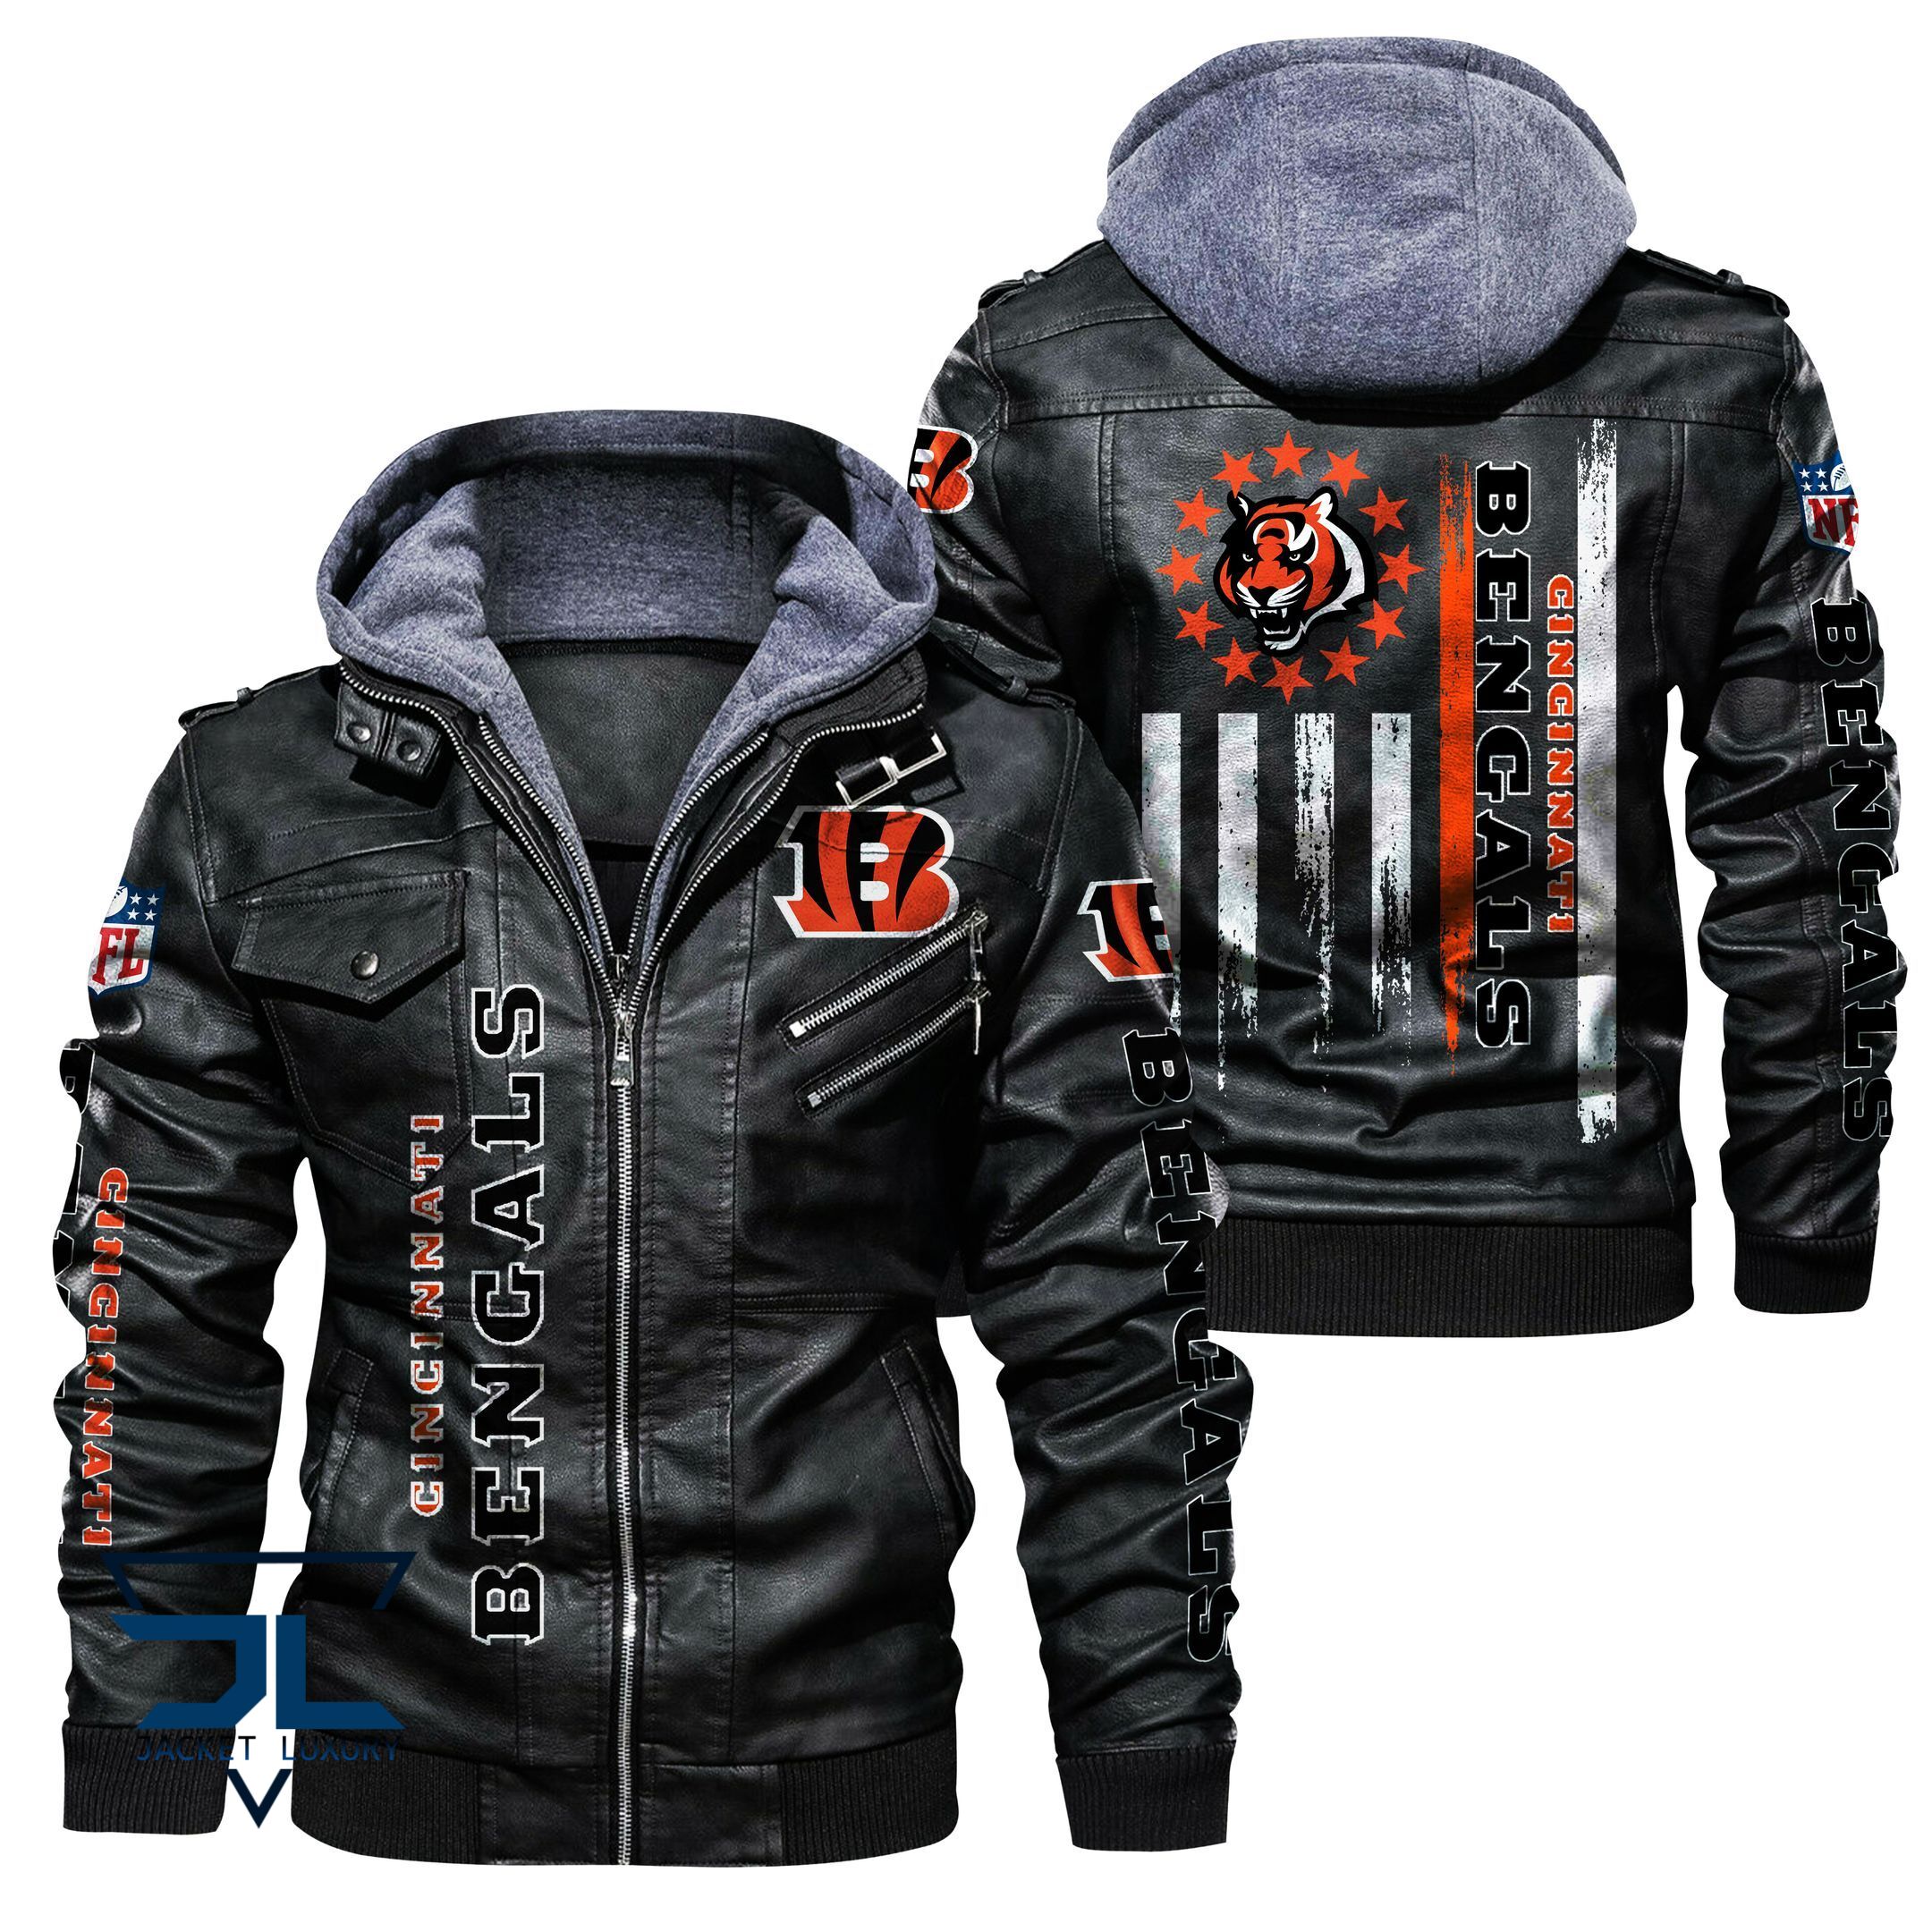 What Leather jacket Sells Best on Techcomshop? 55